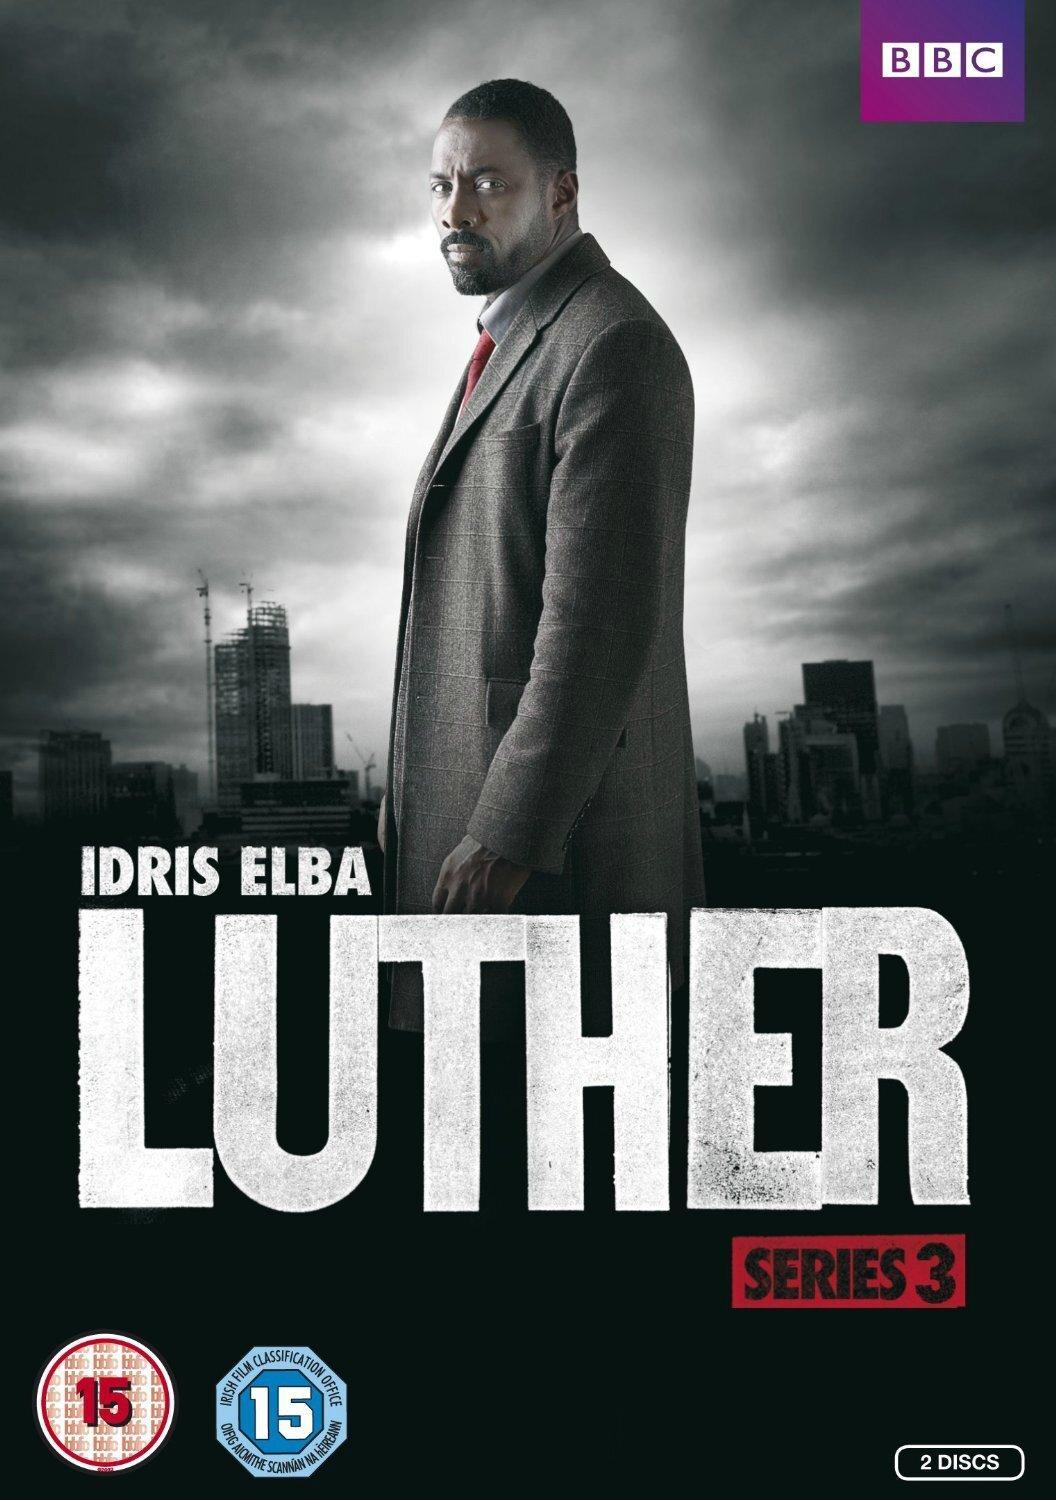 Luther - Saison 3